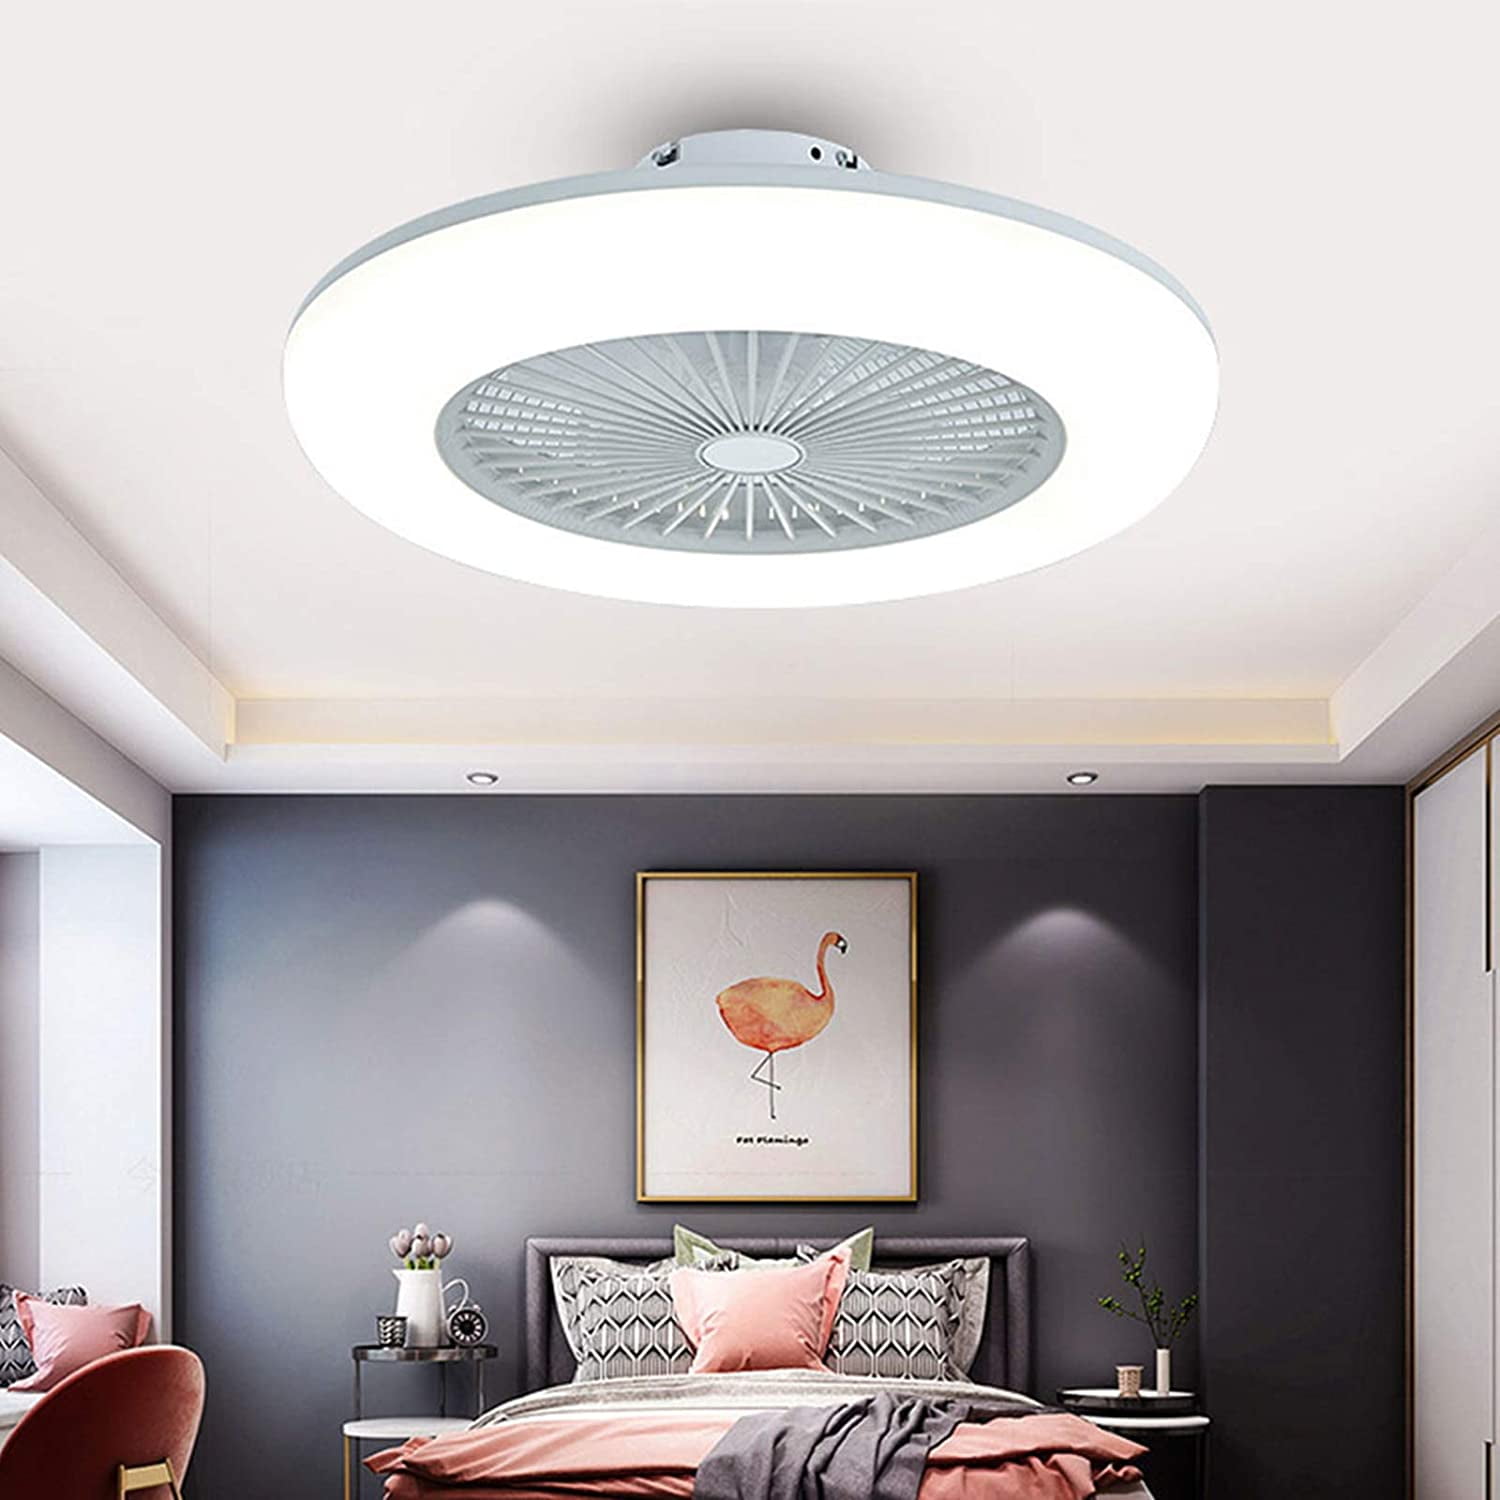 Details about   Ceiling LED Fan Lamp Design Lamp Radiator Fan Remote Control Office Hallway show original title 